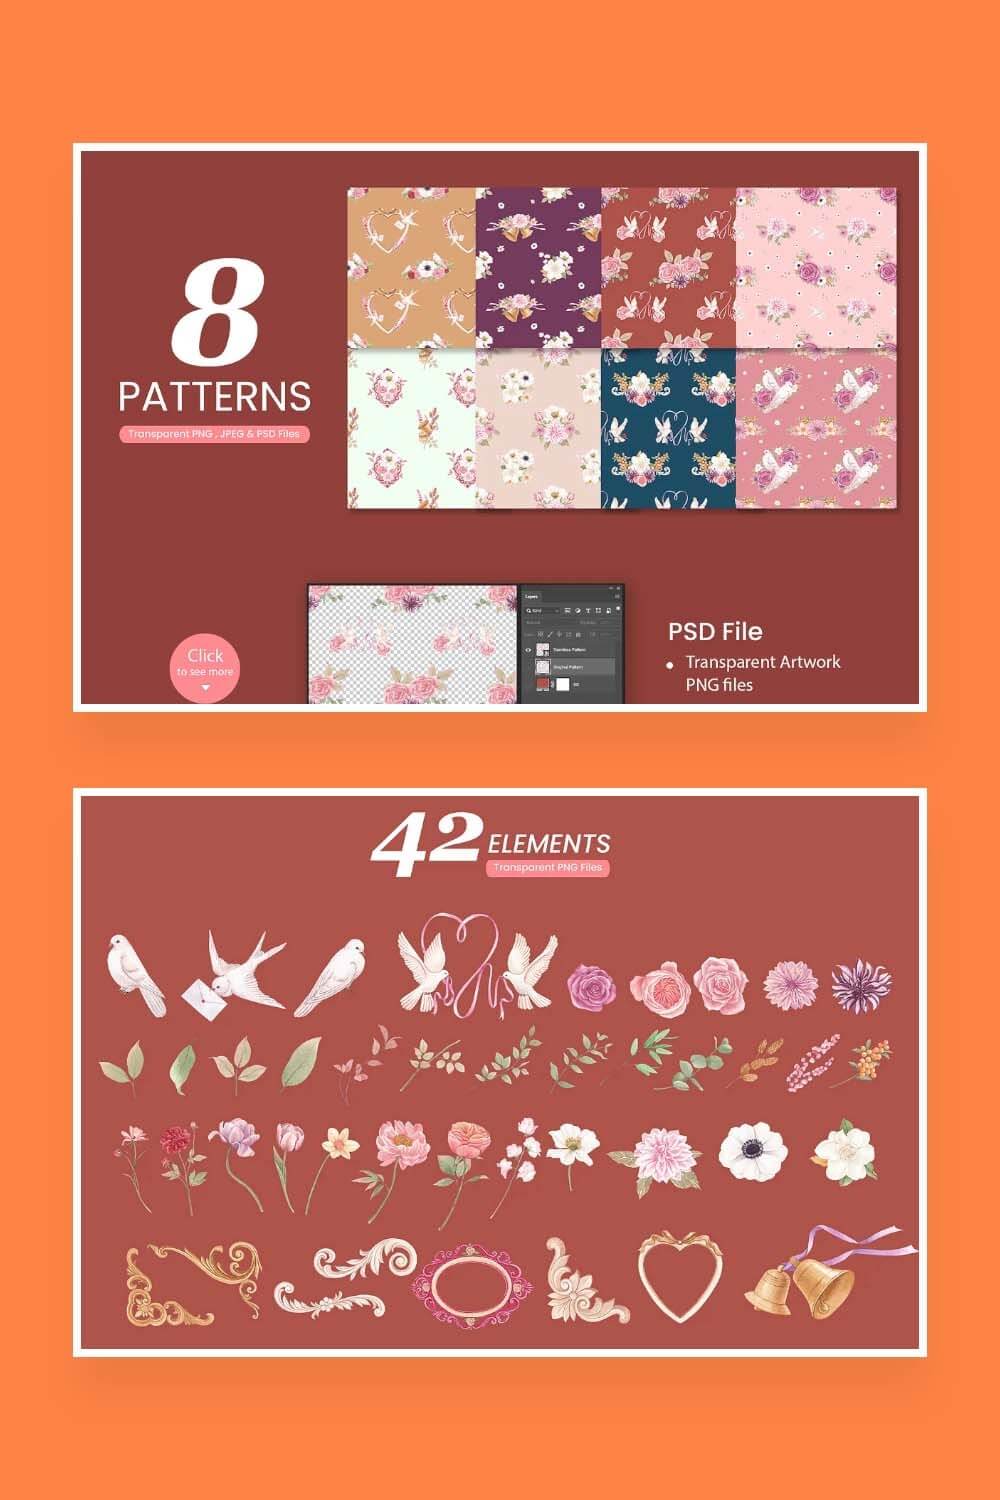 8 Patterns and 42 Elements Cottagecore Flowers Illustration.